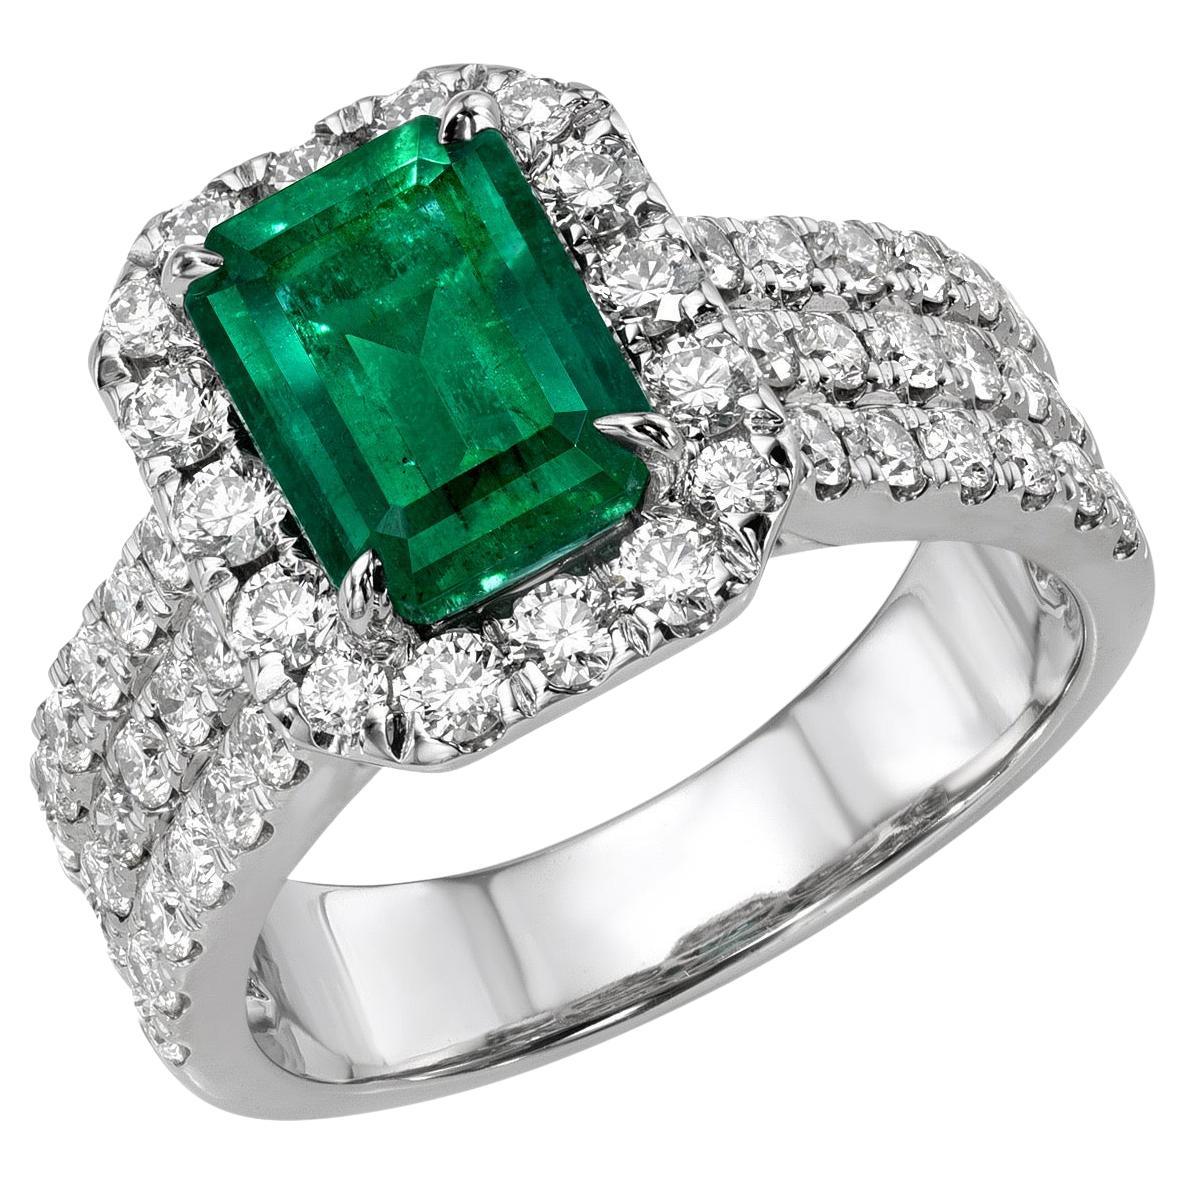 Contemporary Emerald Ring 2.05 Carat Emerald Cut For Sale